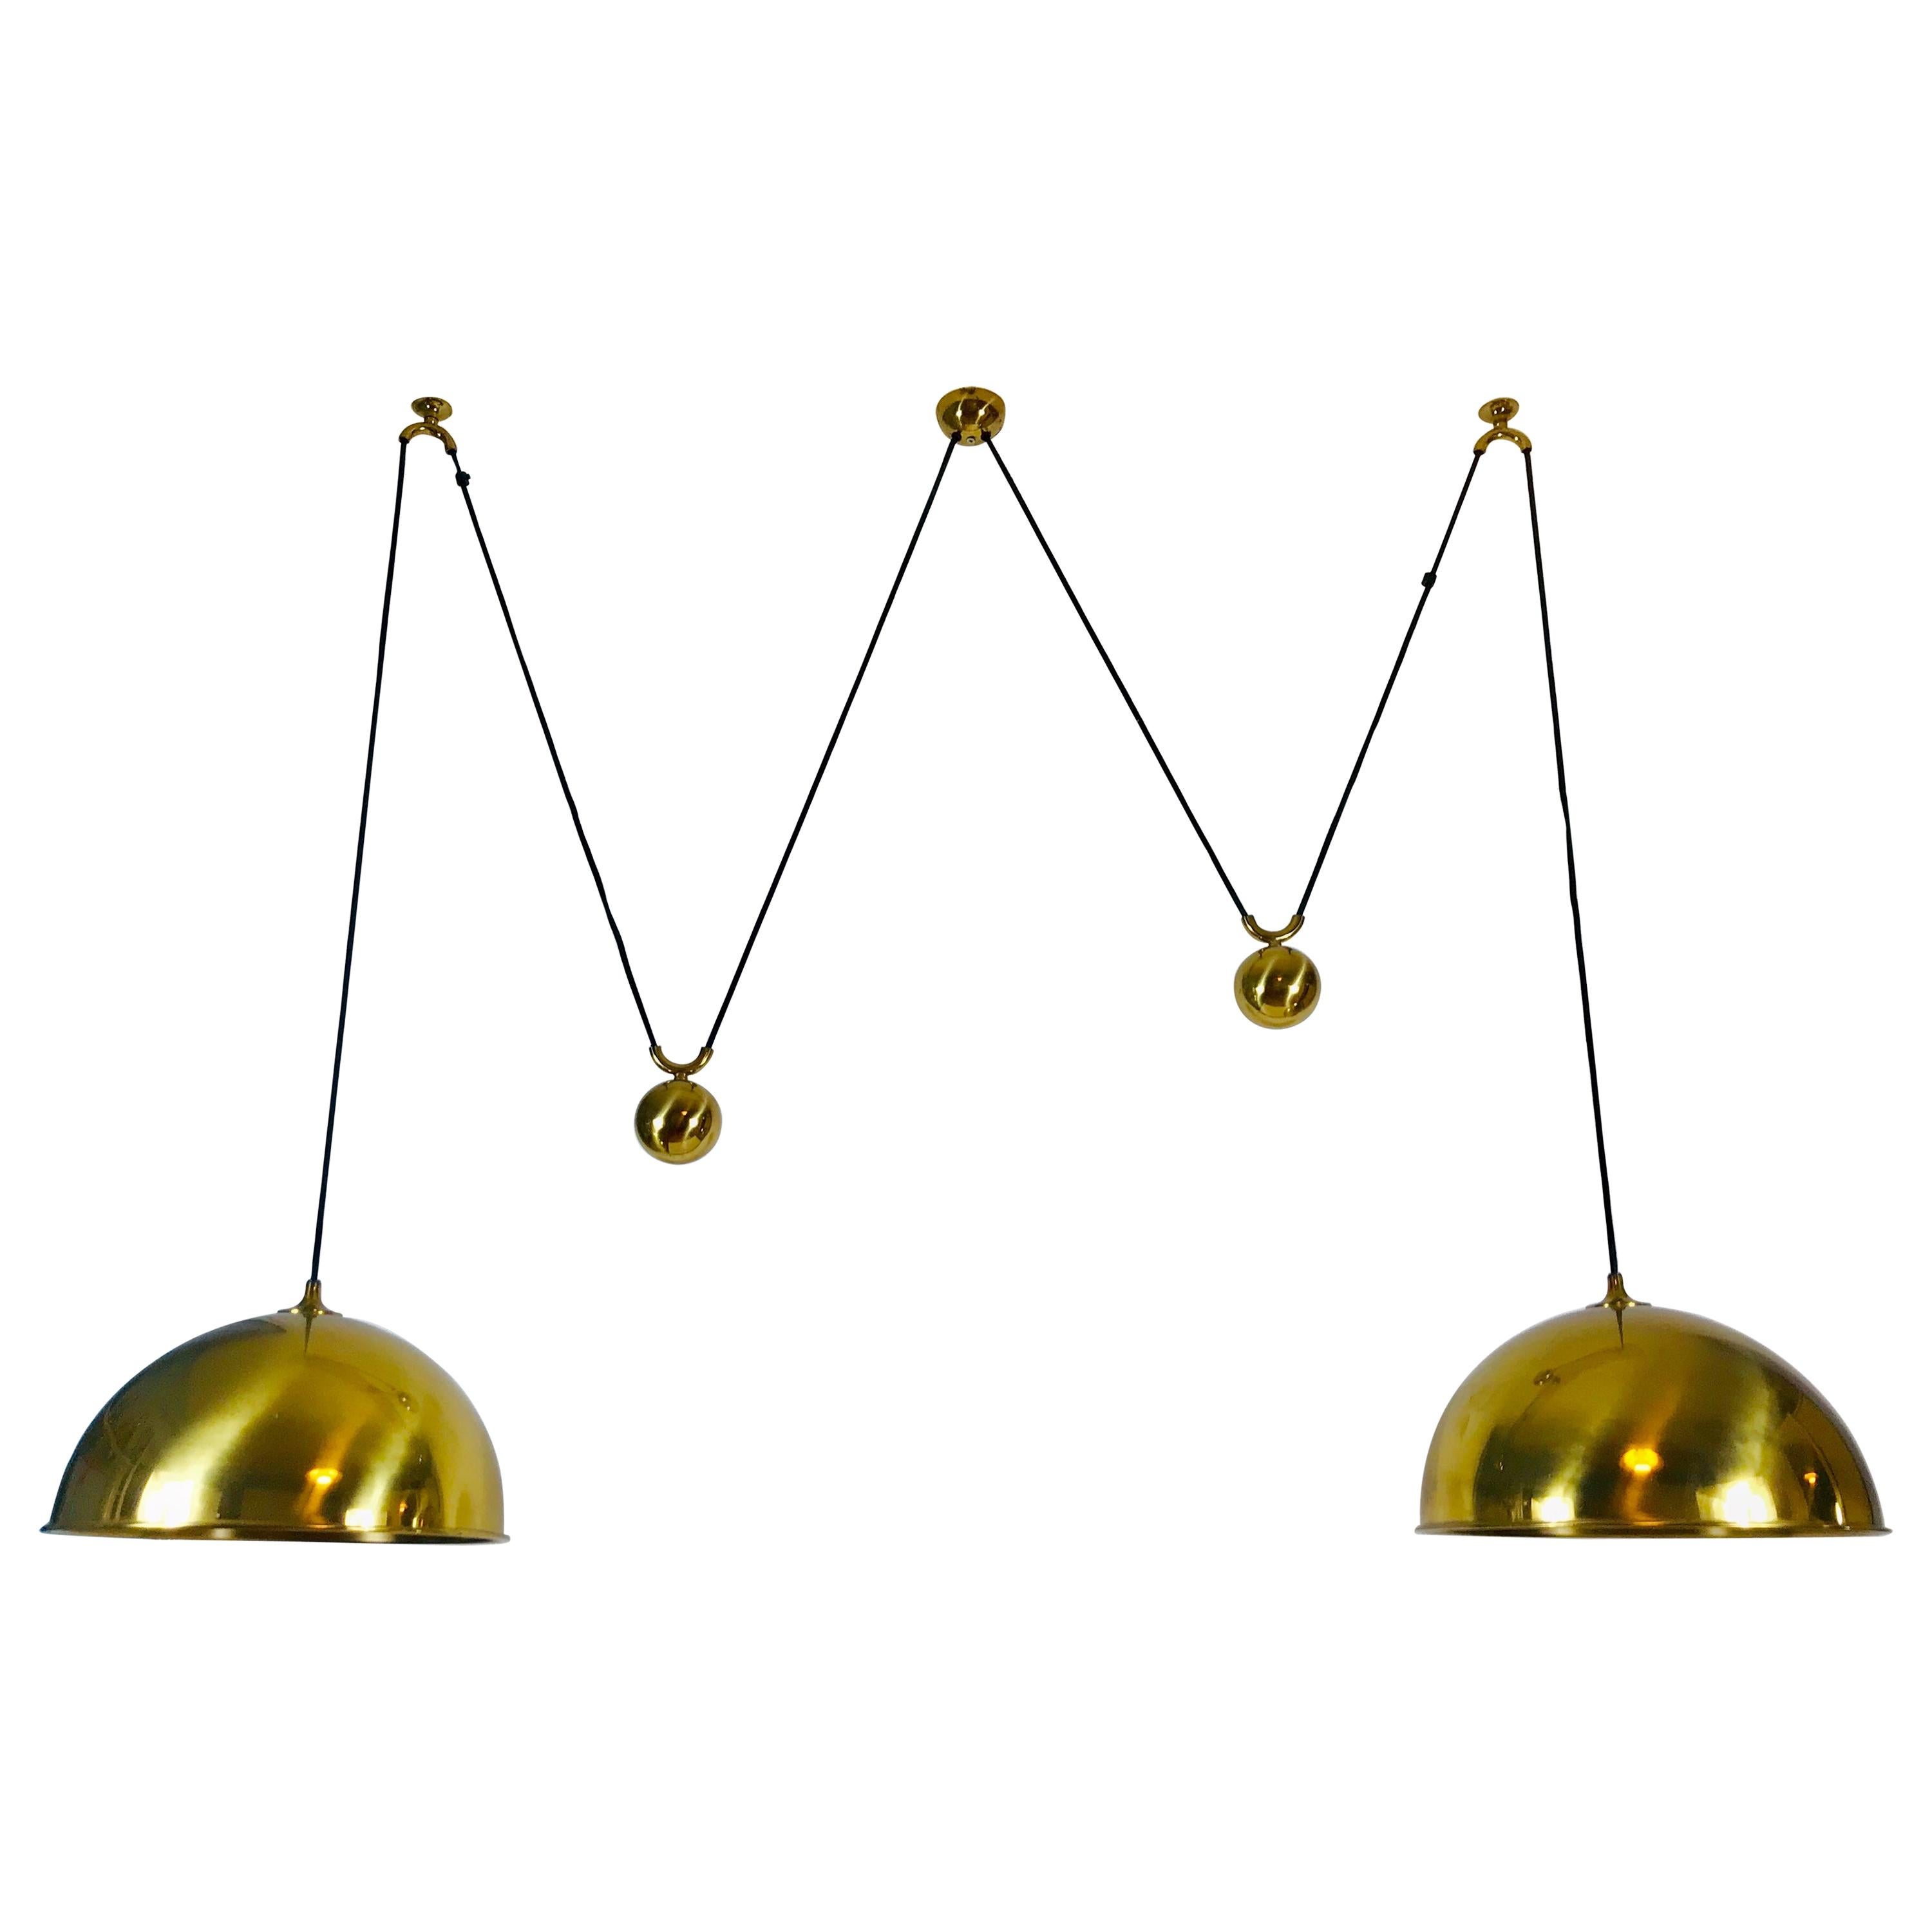 Polished Brass Counter Balance Pendants by Florian Schulz, 1970s, Germany